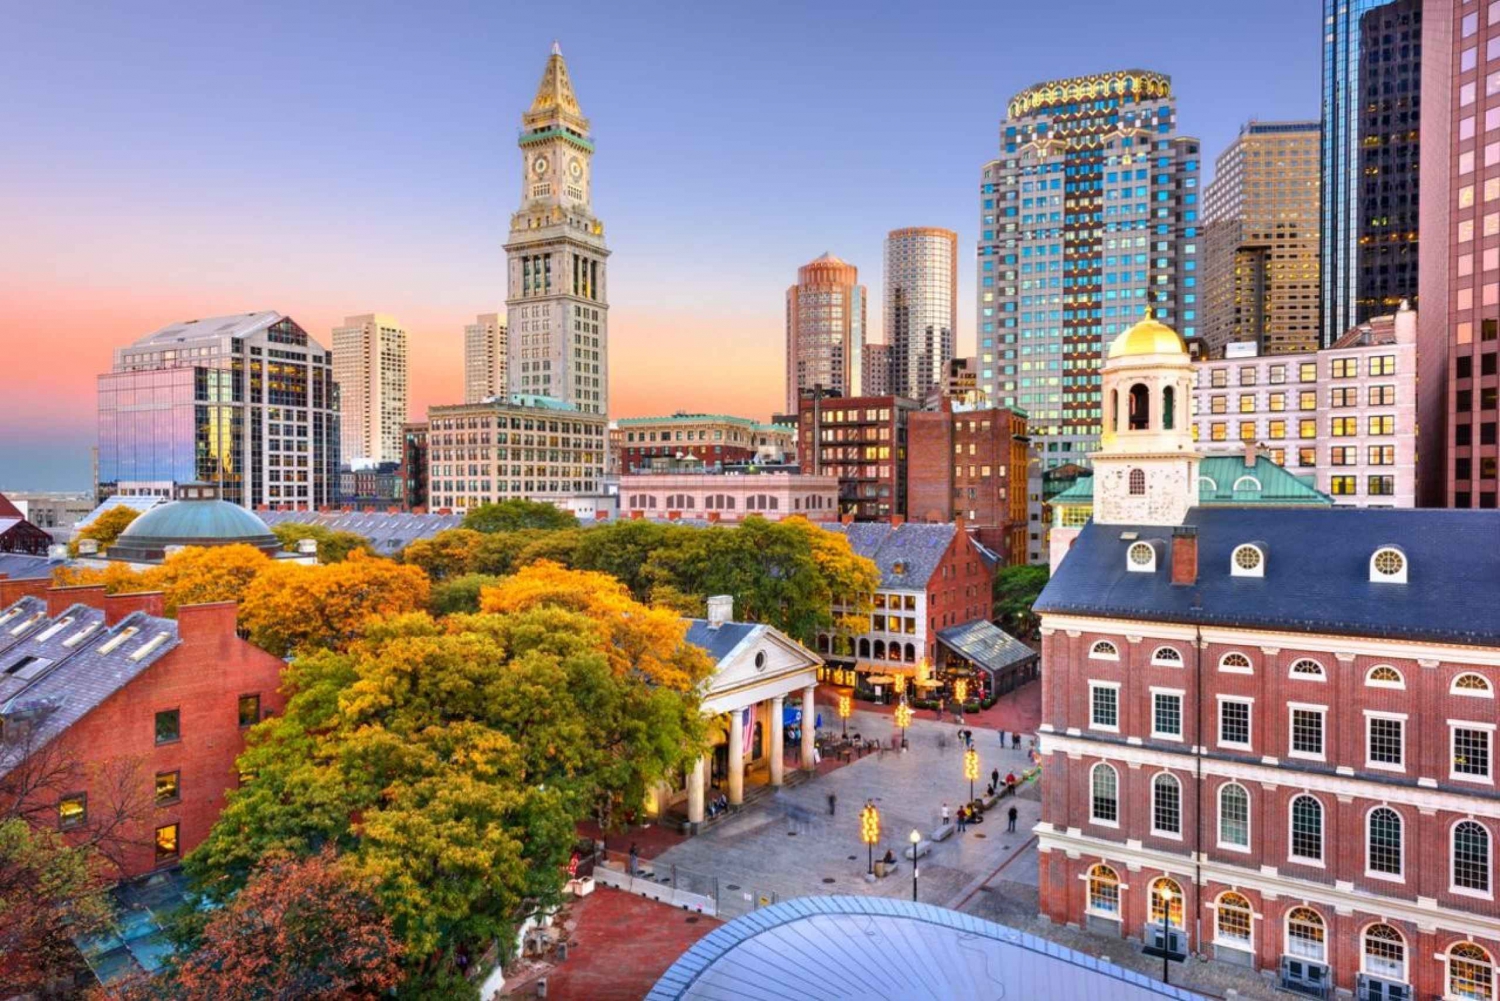 Boston’s Historic Heart: A Walk Through Time